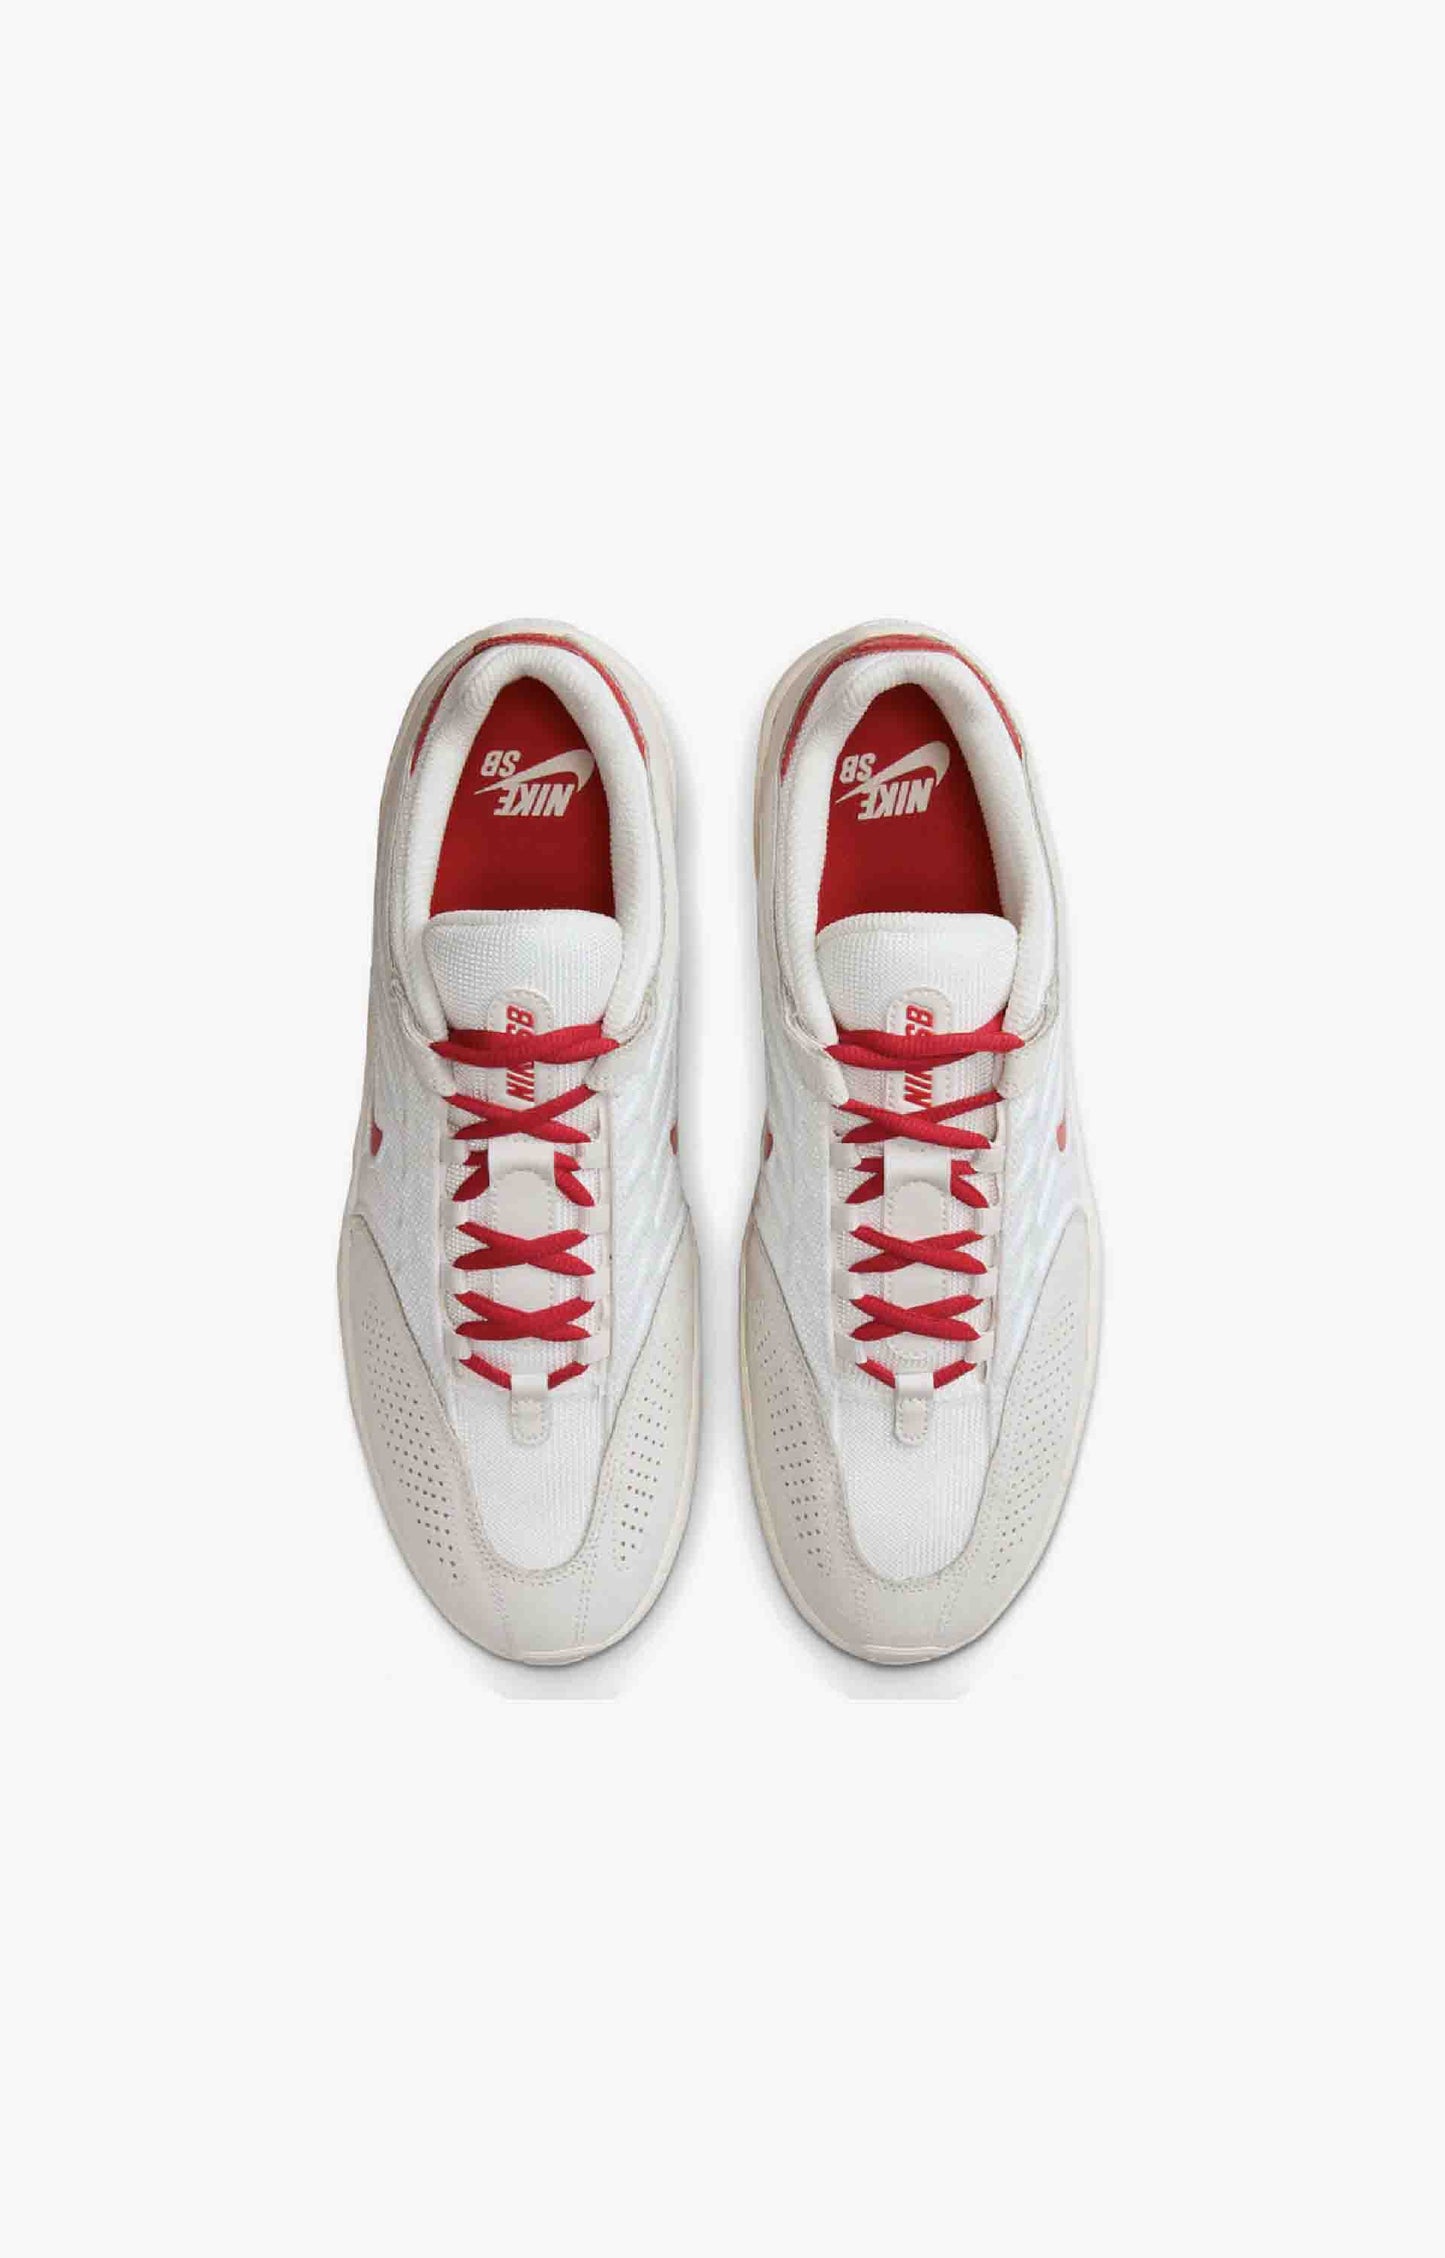 Nike SB Vertebrae Men's Shoes, Summit White/ University Red